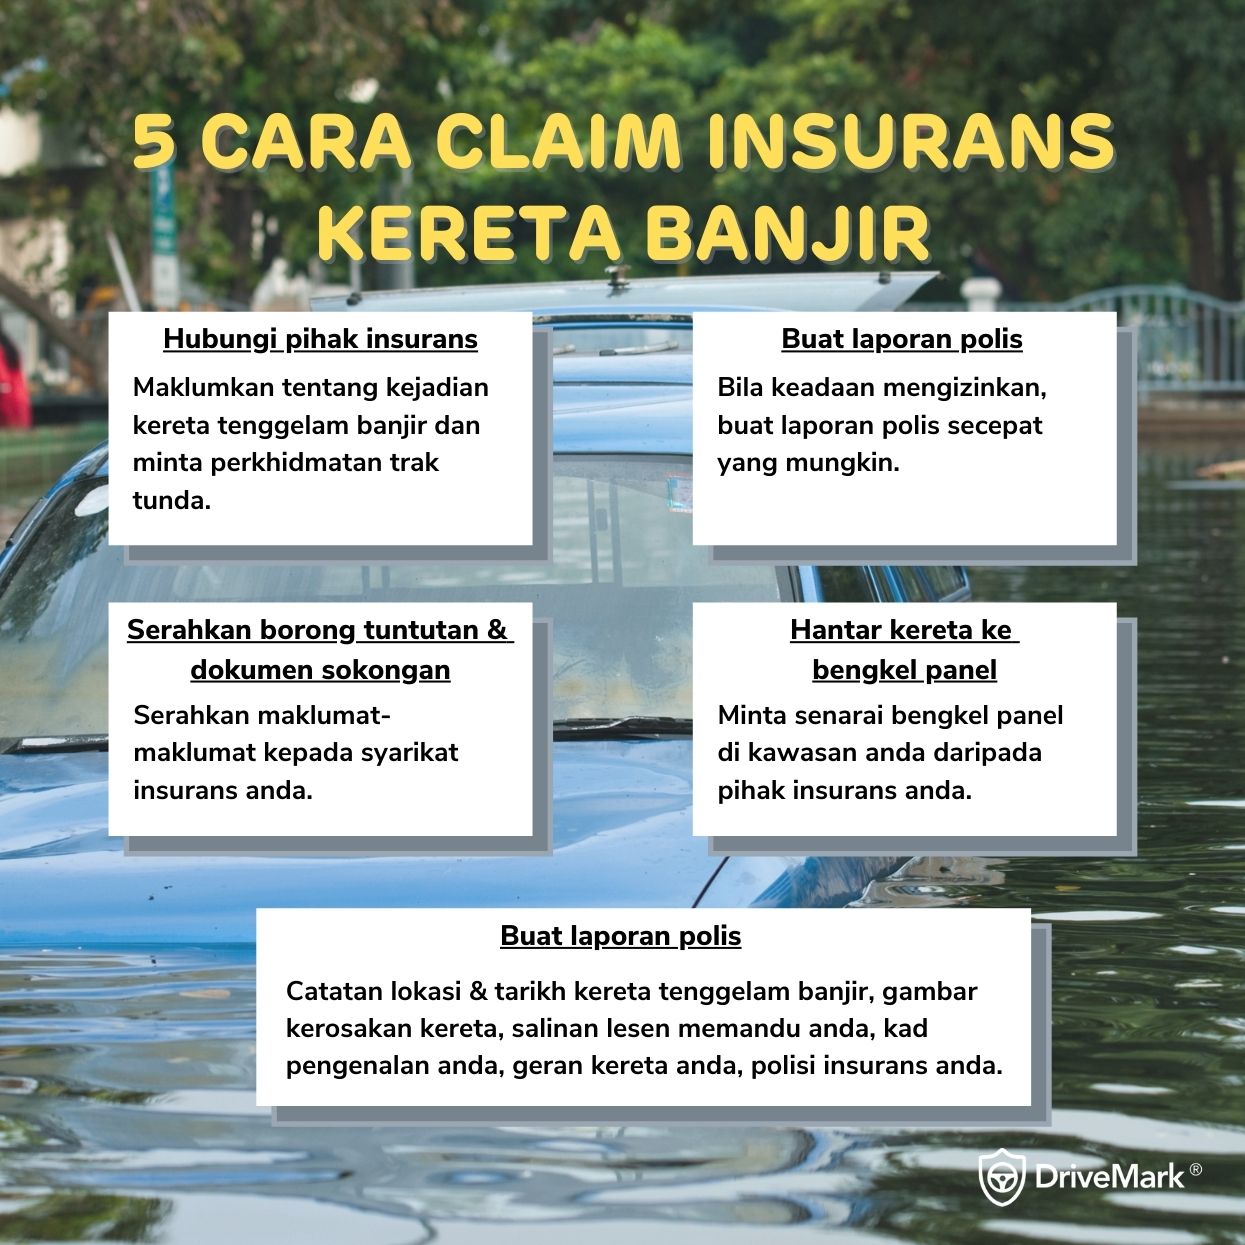 claim insurans kereta banjir